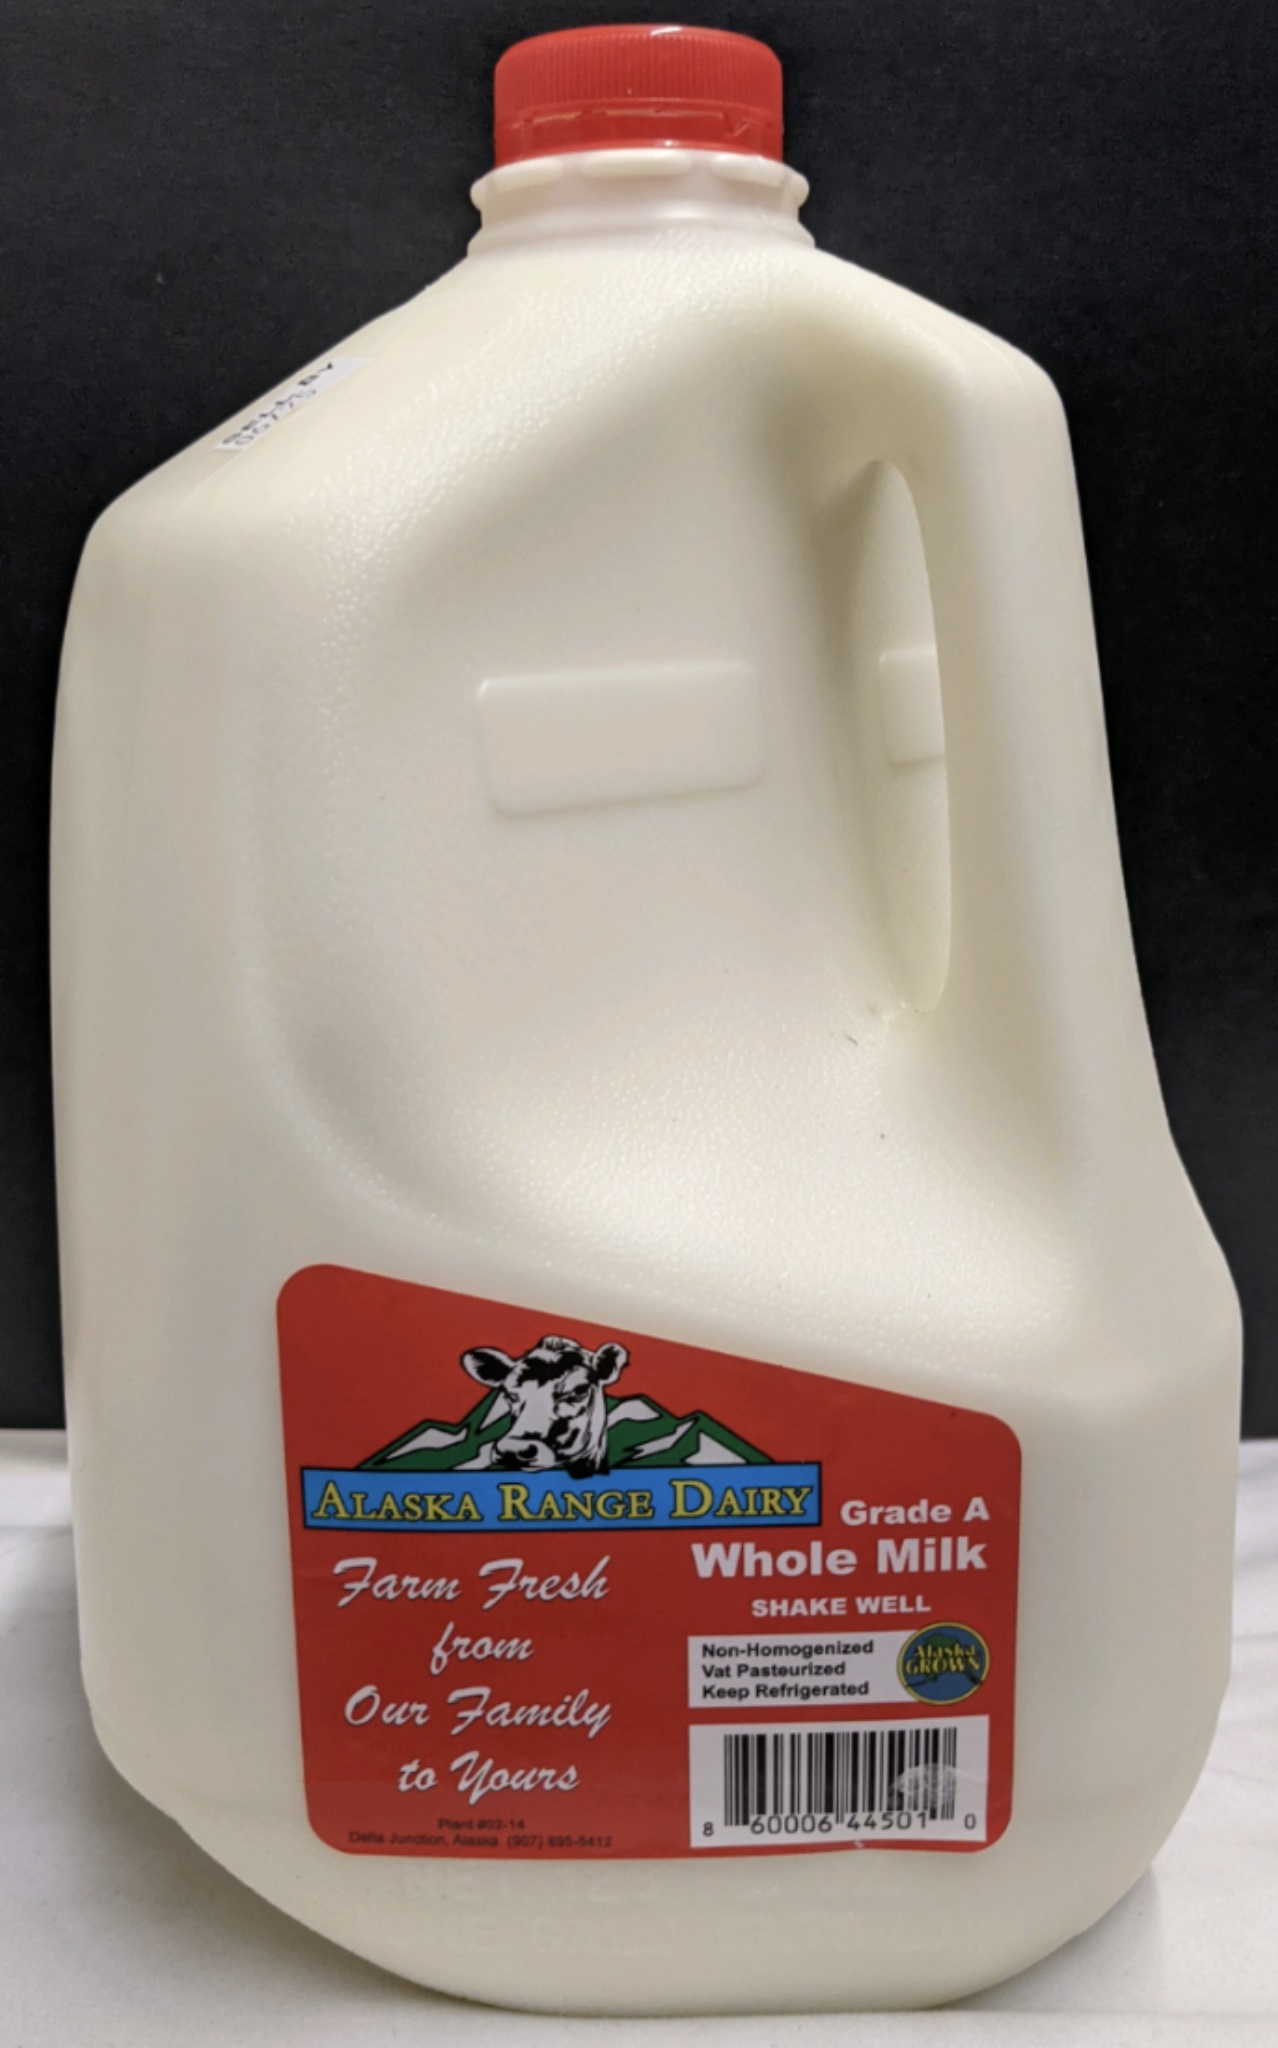 Milk Whole Cream Top Non-Homogenized 1gal Alaska Range Dairy - Sold by PACK